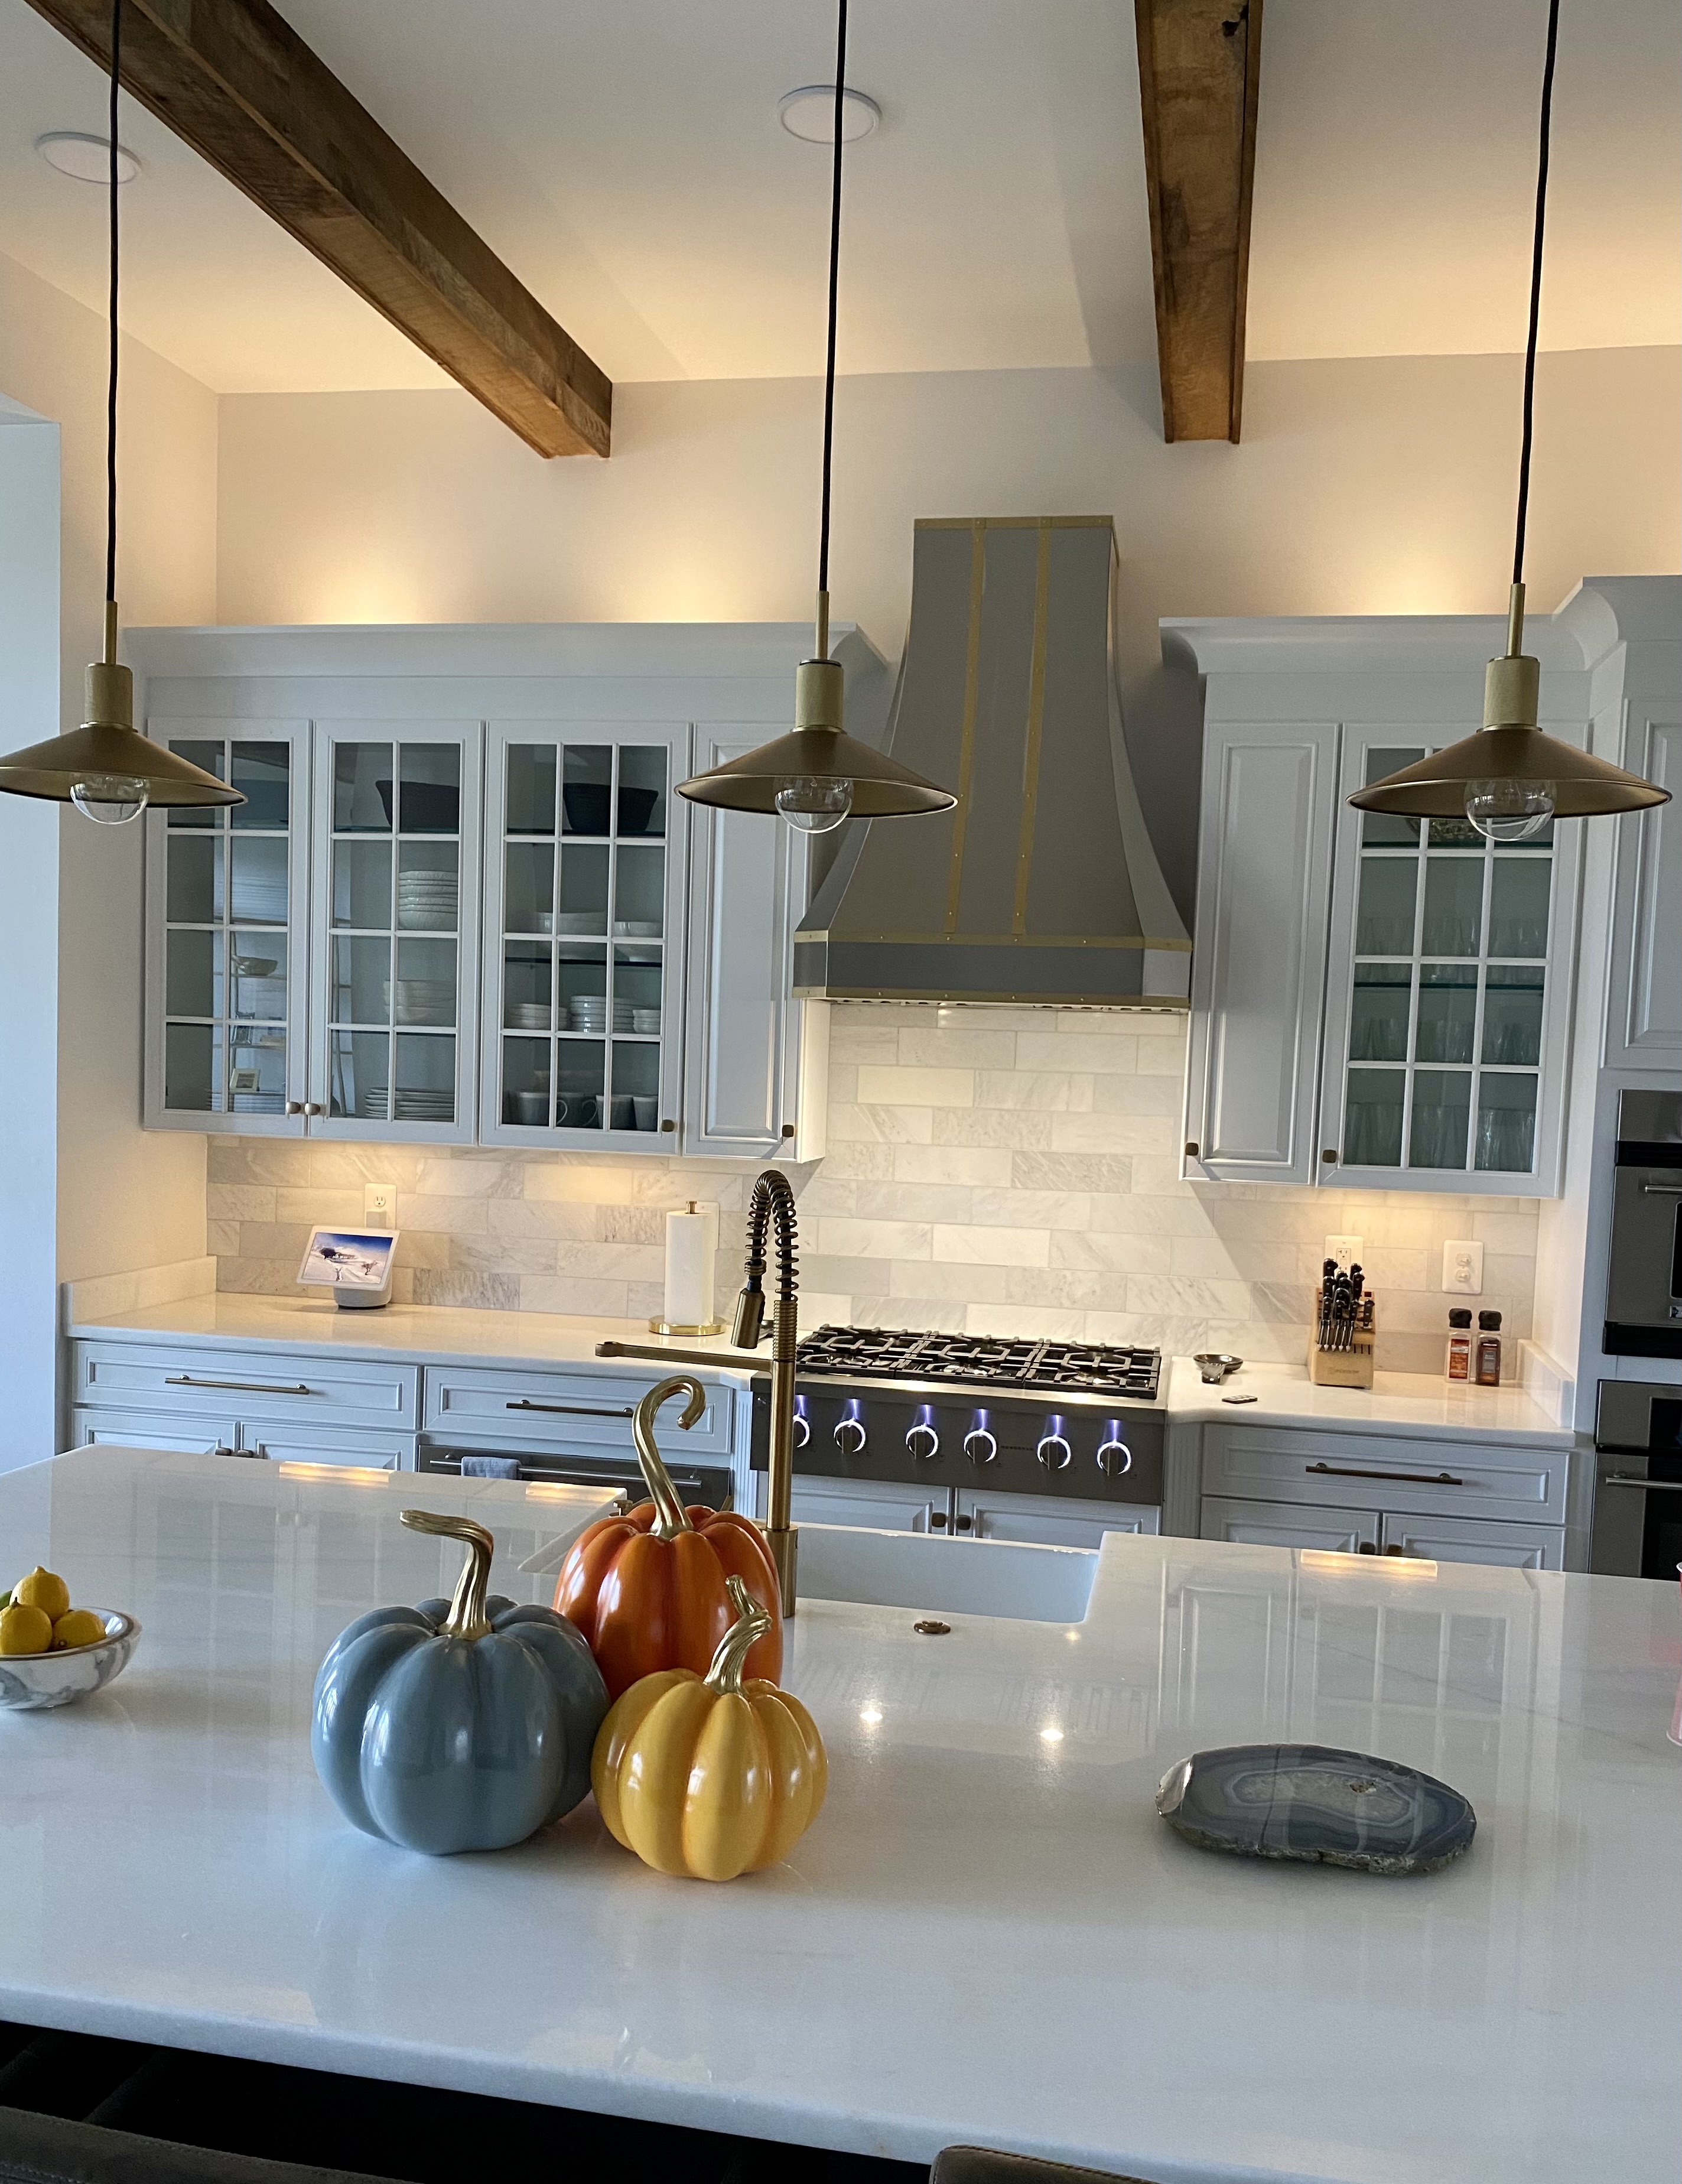 Timeless kitchen design idea with a classic kitchen, range hood styles, sleek white kitchen cabinets, marble kitchen countertops, and elegant marble backsplash